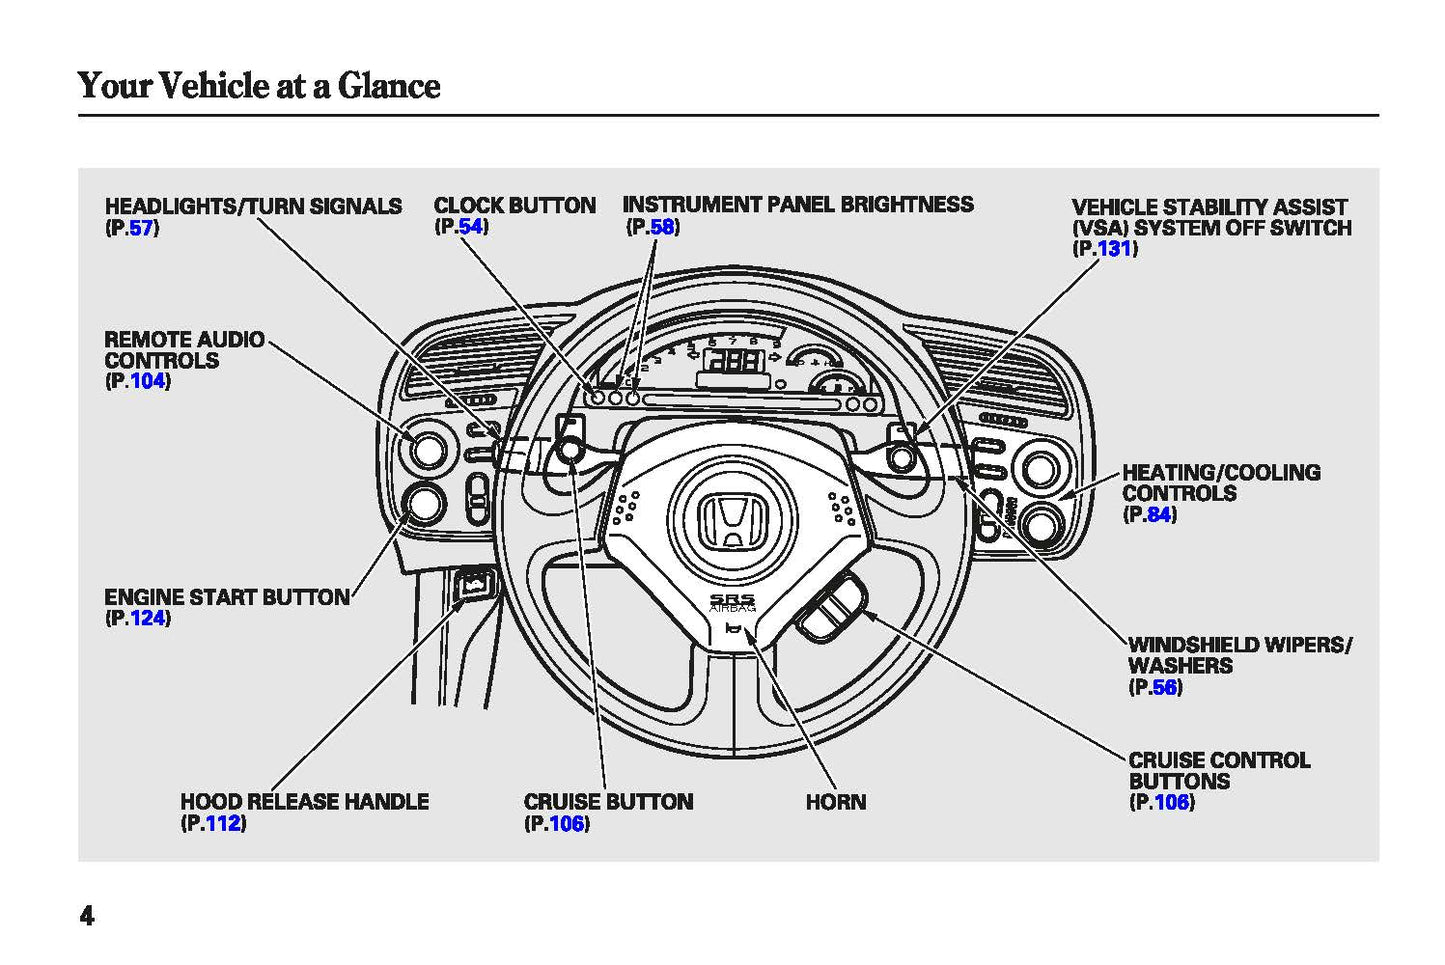 2007 Honda S2000 Owner's Manual | English